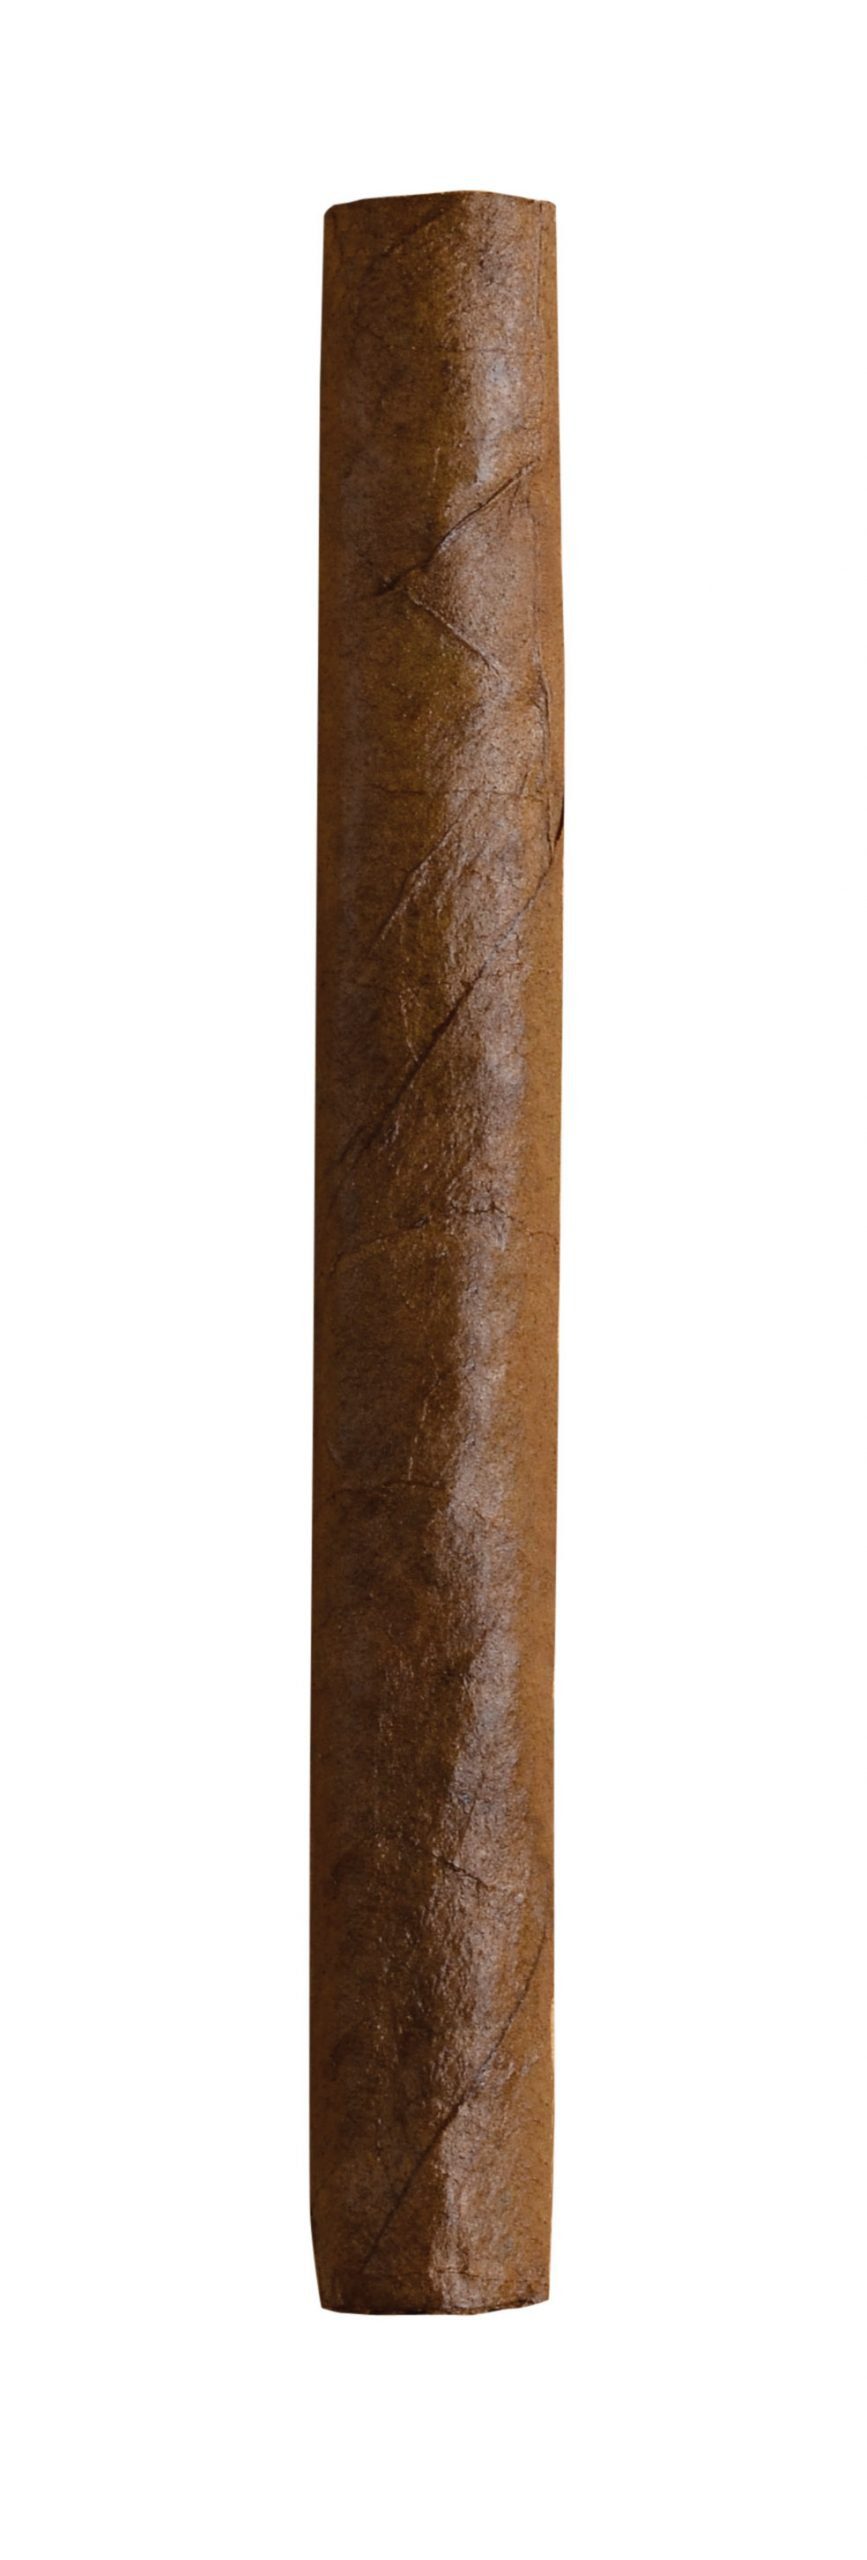 dutch delites sumatra single cigar